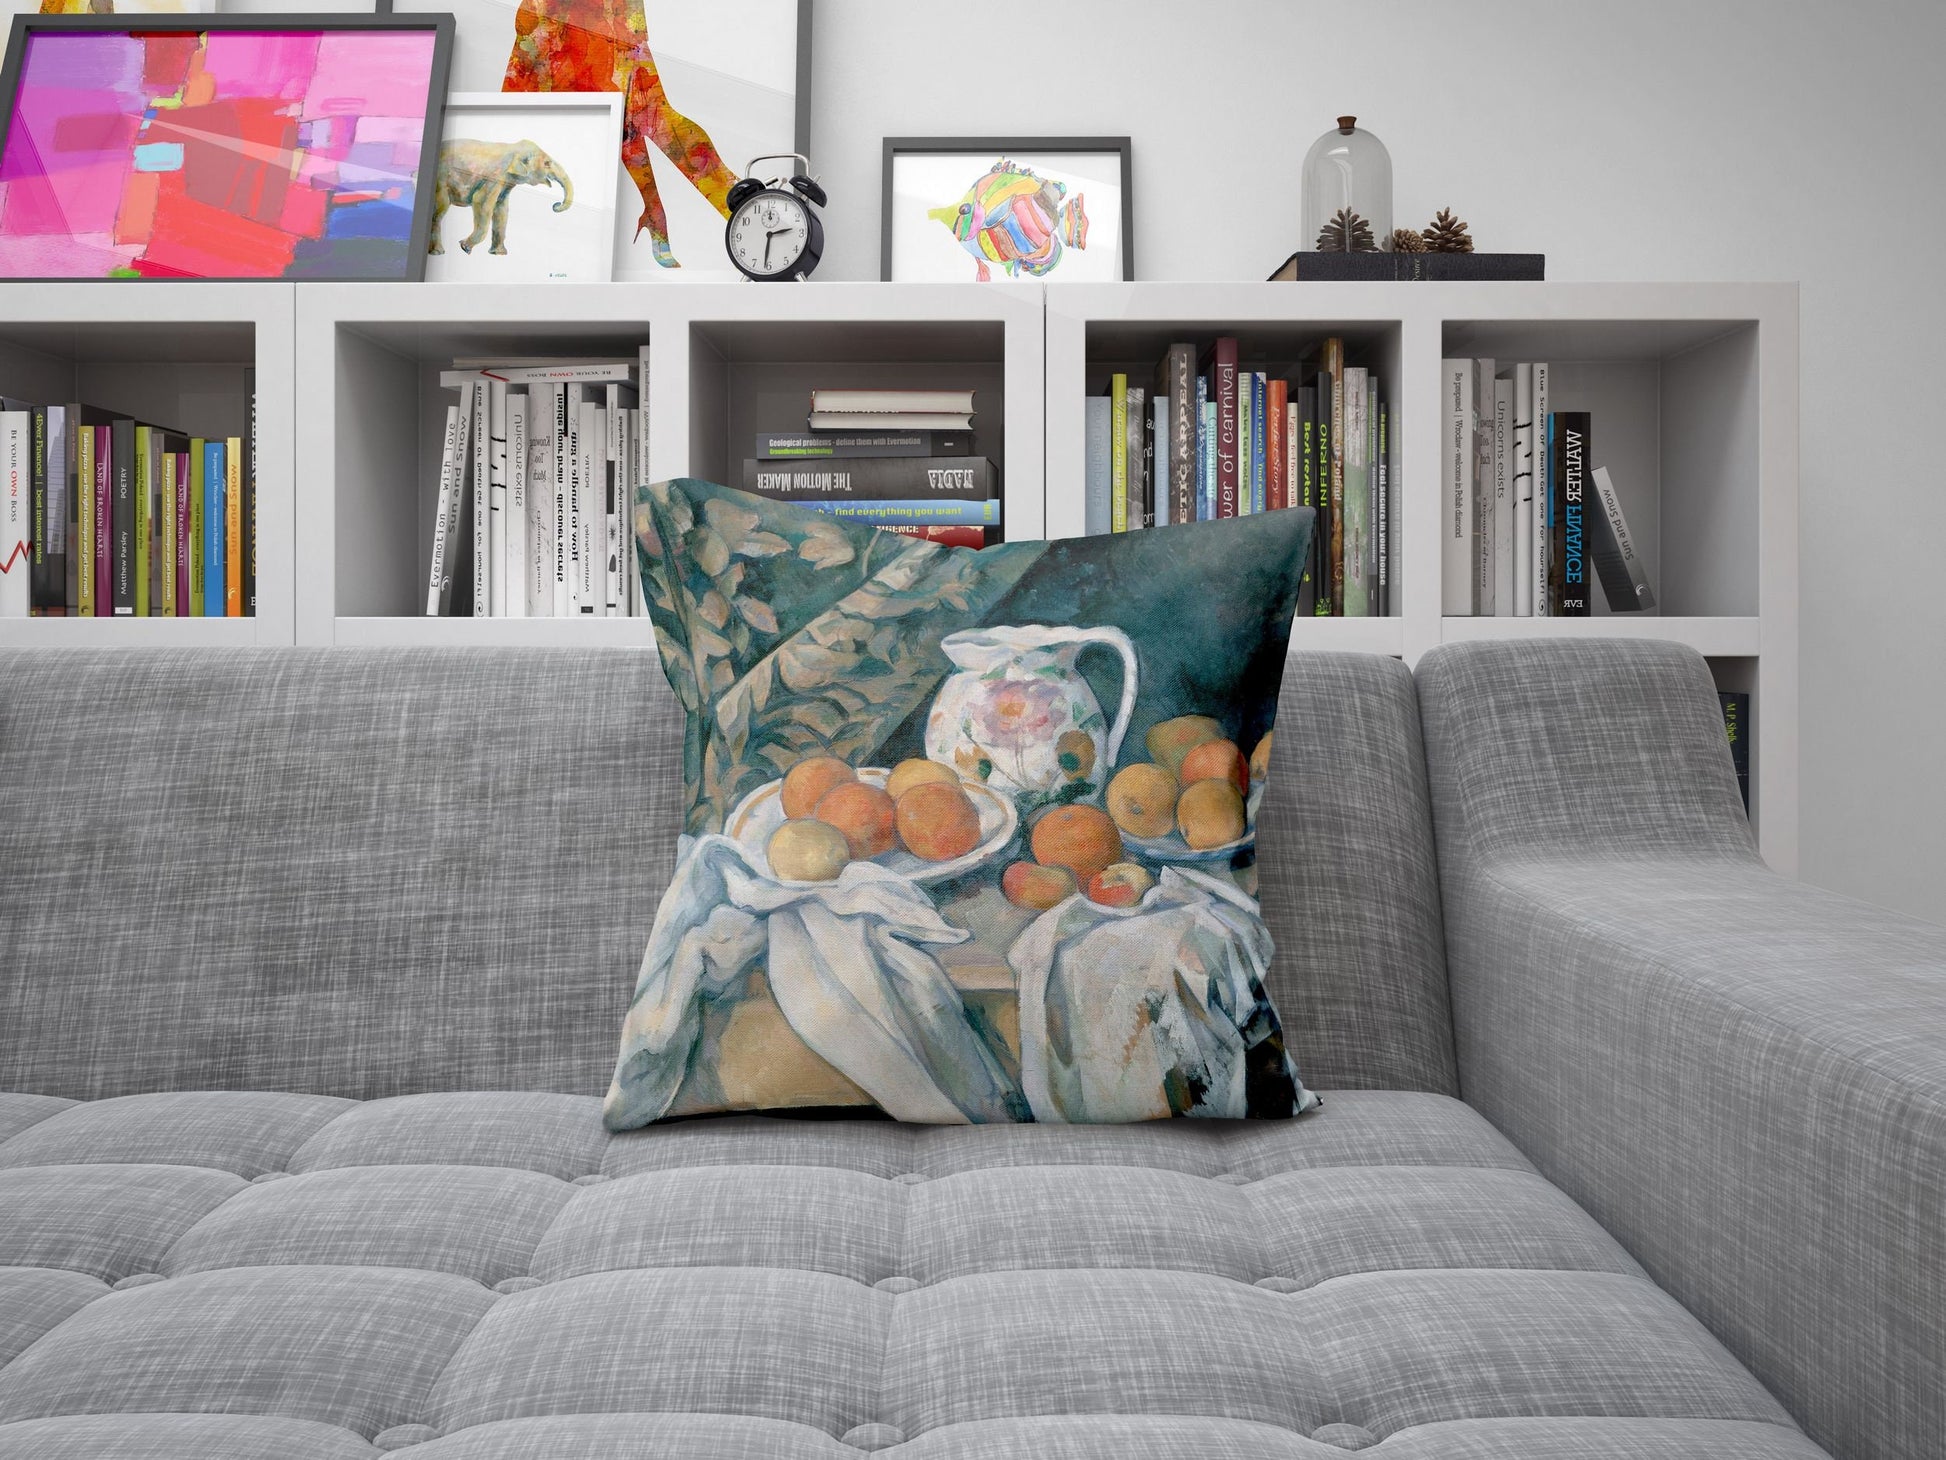 Paul Cezanne Famous Painting, Toss Pillow, Abstract Pillow, Artist Pillow, Orange Pillow, Post-Impressionist Art, 22X22 Pillow Cover